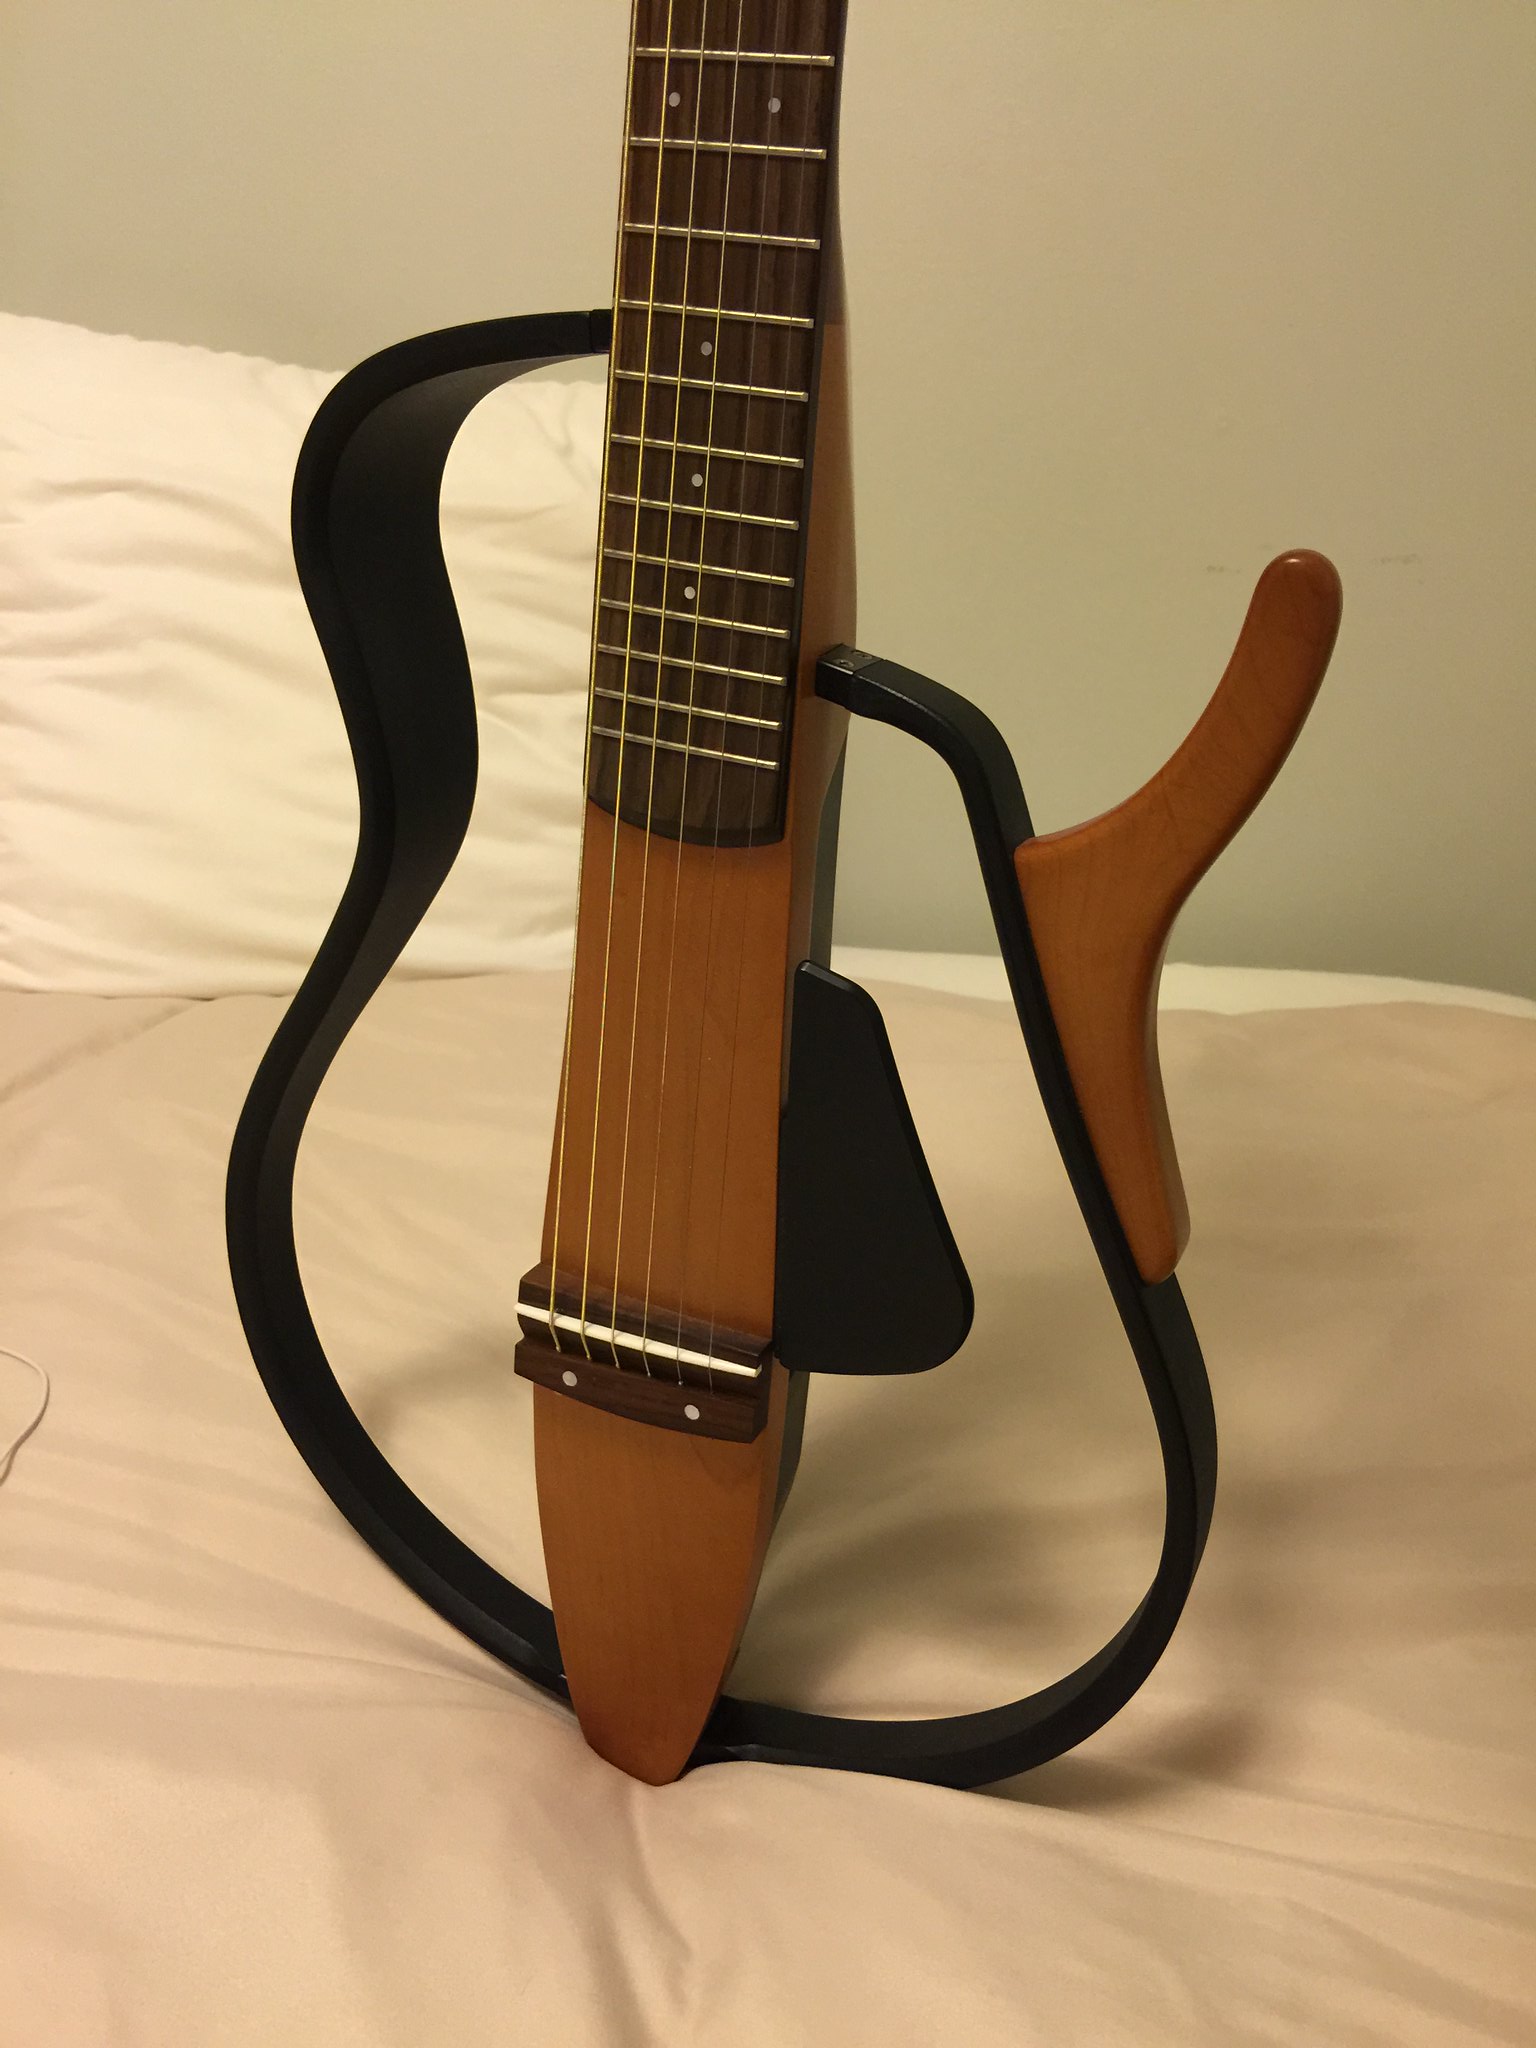 NGD - Yamaha Silent Guitar - The Acoustic Guitar